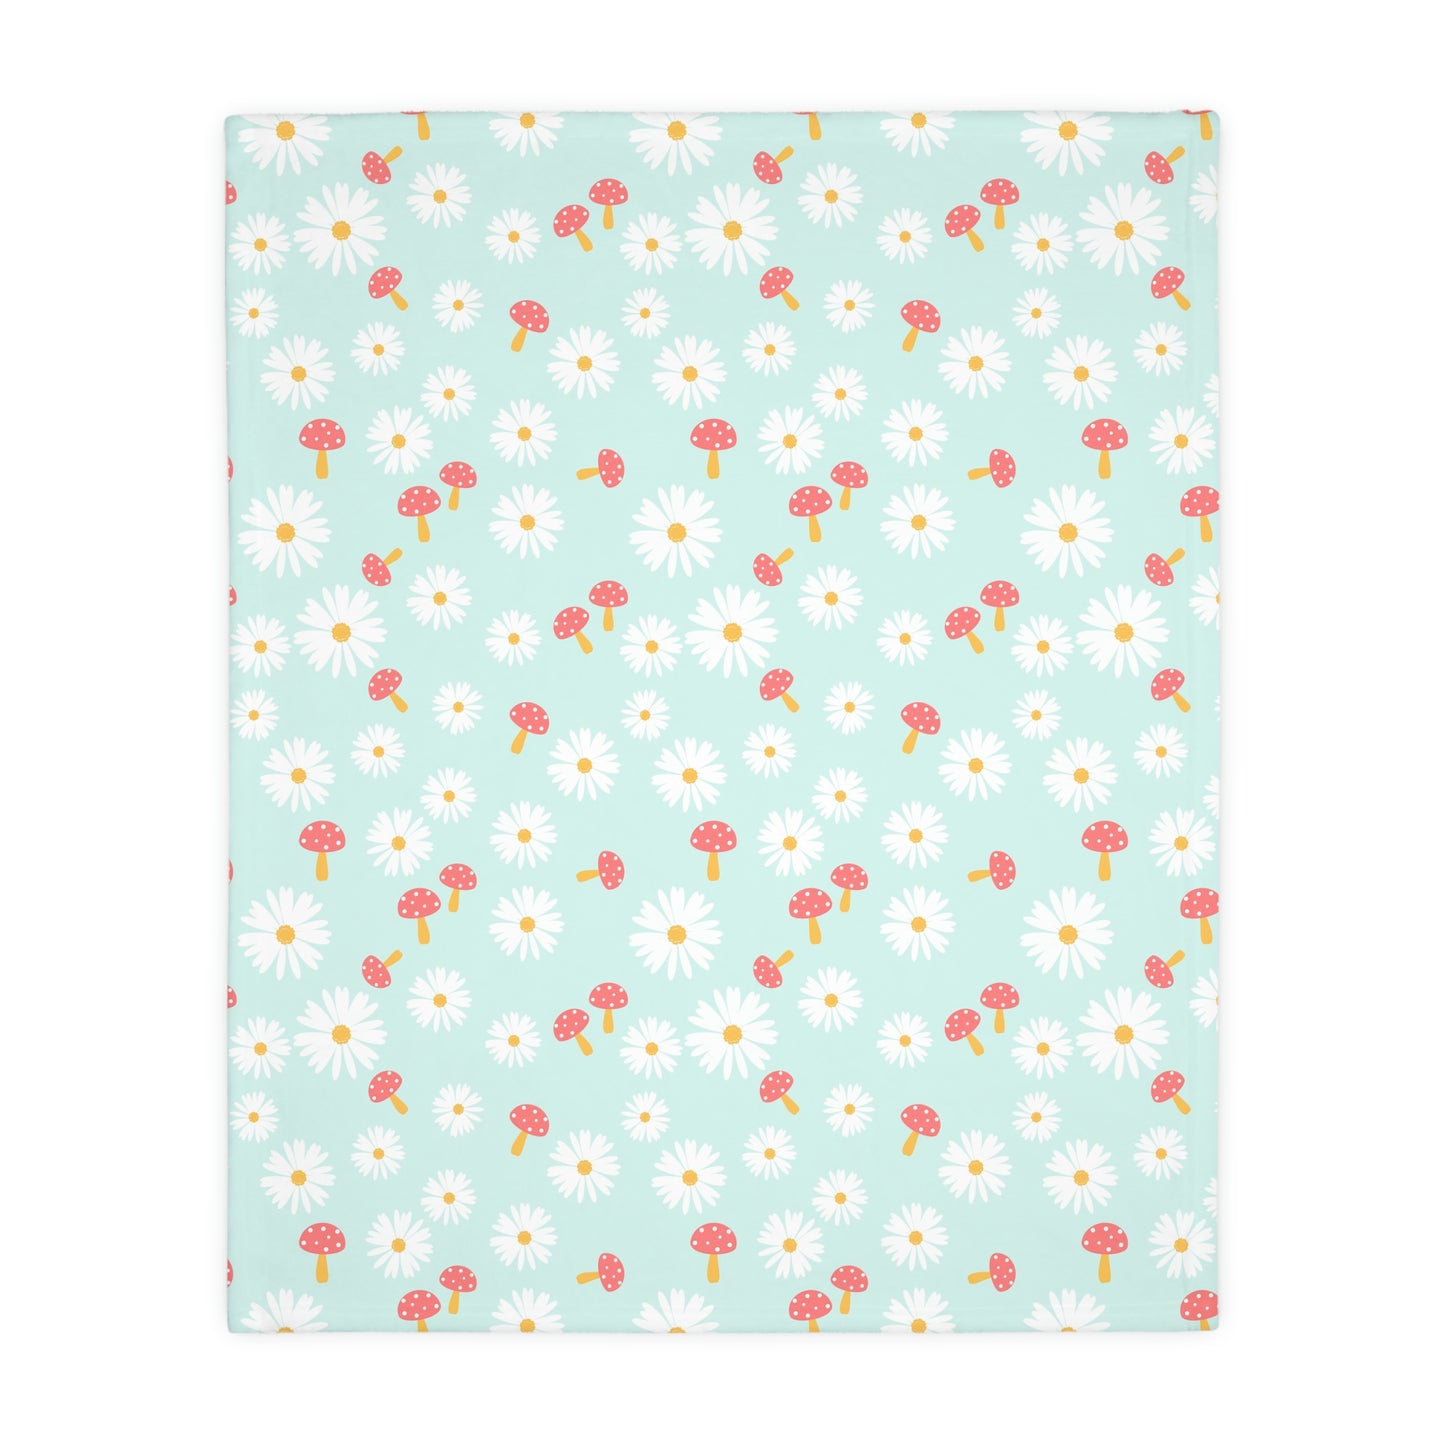 Daisies and Mushrooms Velveteen Minky Blanket (Two-sided print)